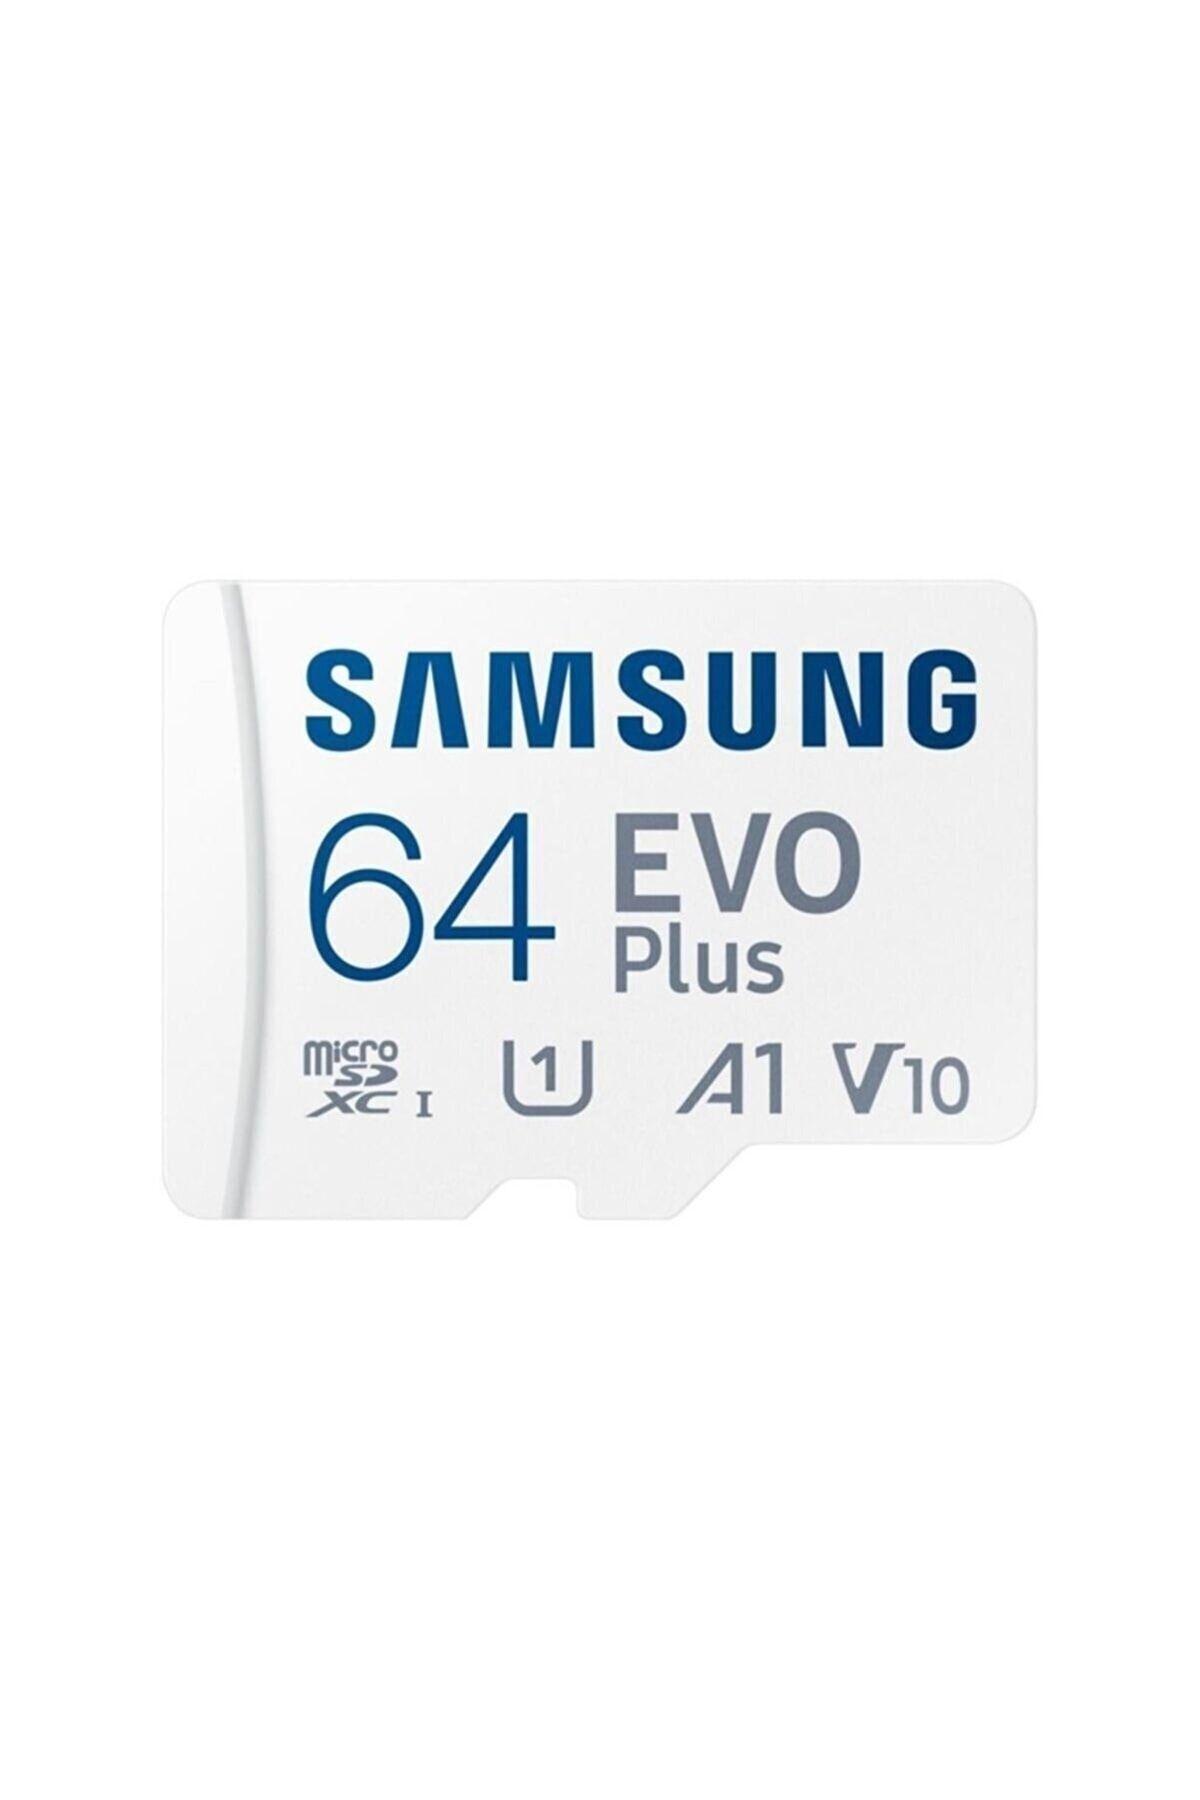 Samsung Evo Plus 64 GB Micro sd